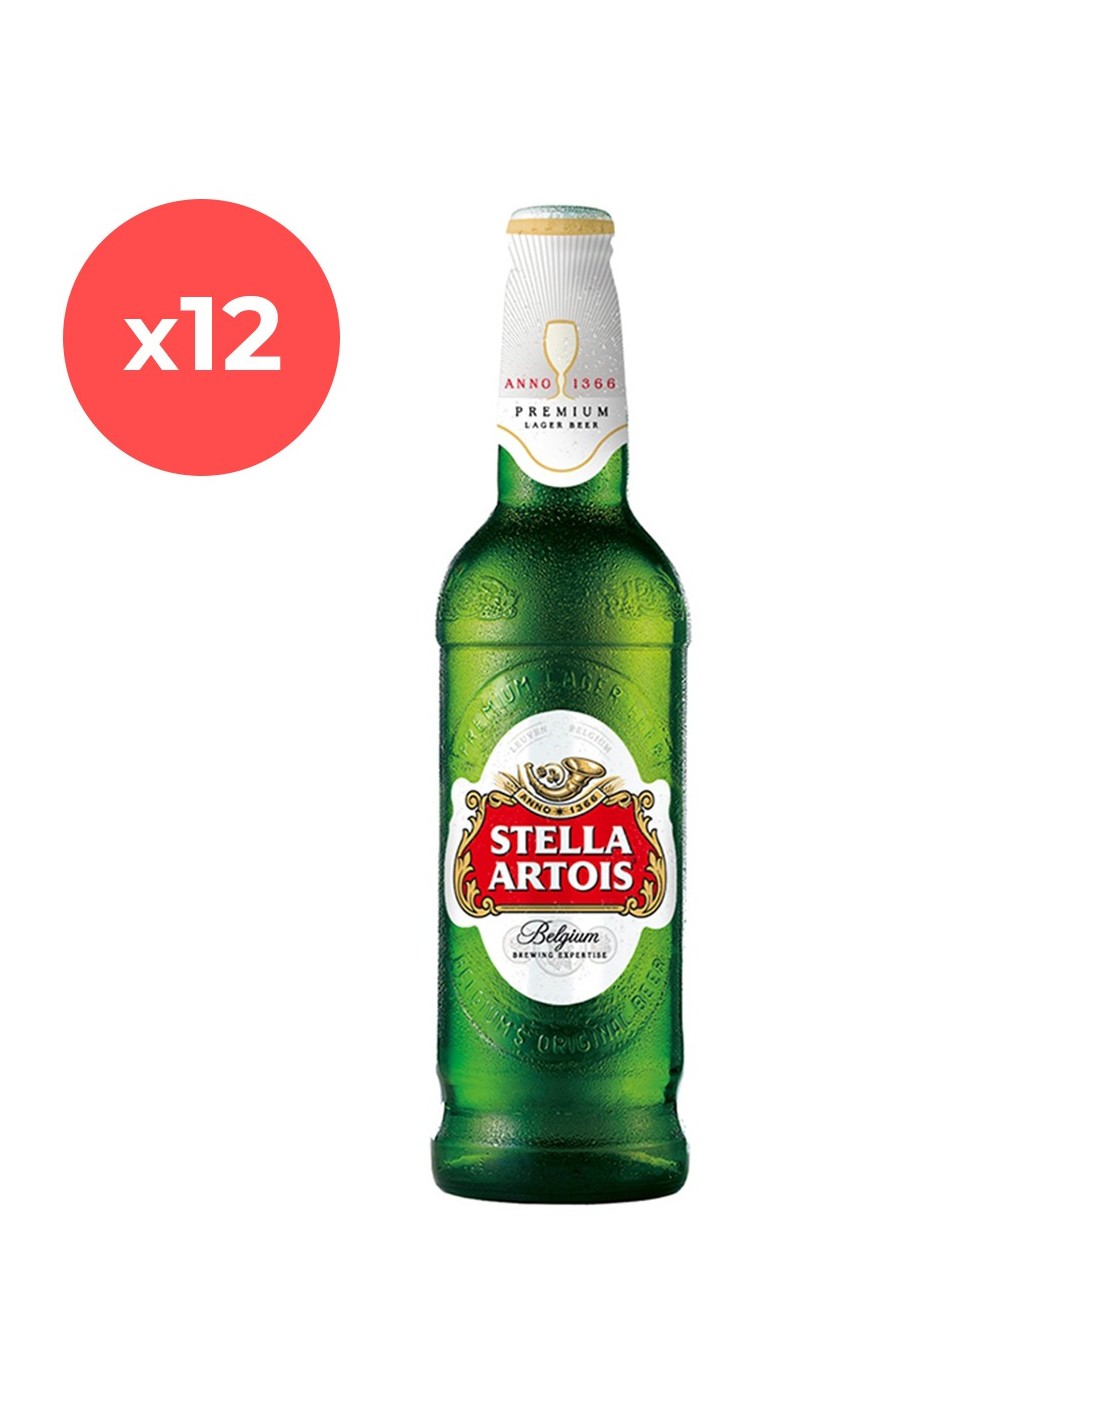 Bax 12 bucati bere blonda Stella Artois, 5% alc., 0.66L, sticla, Romania alcooldiscount.ro